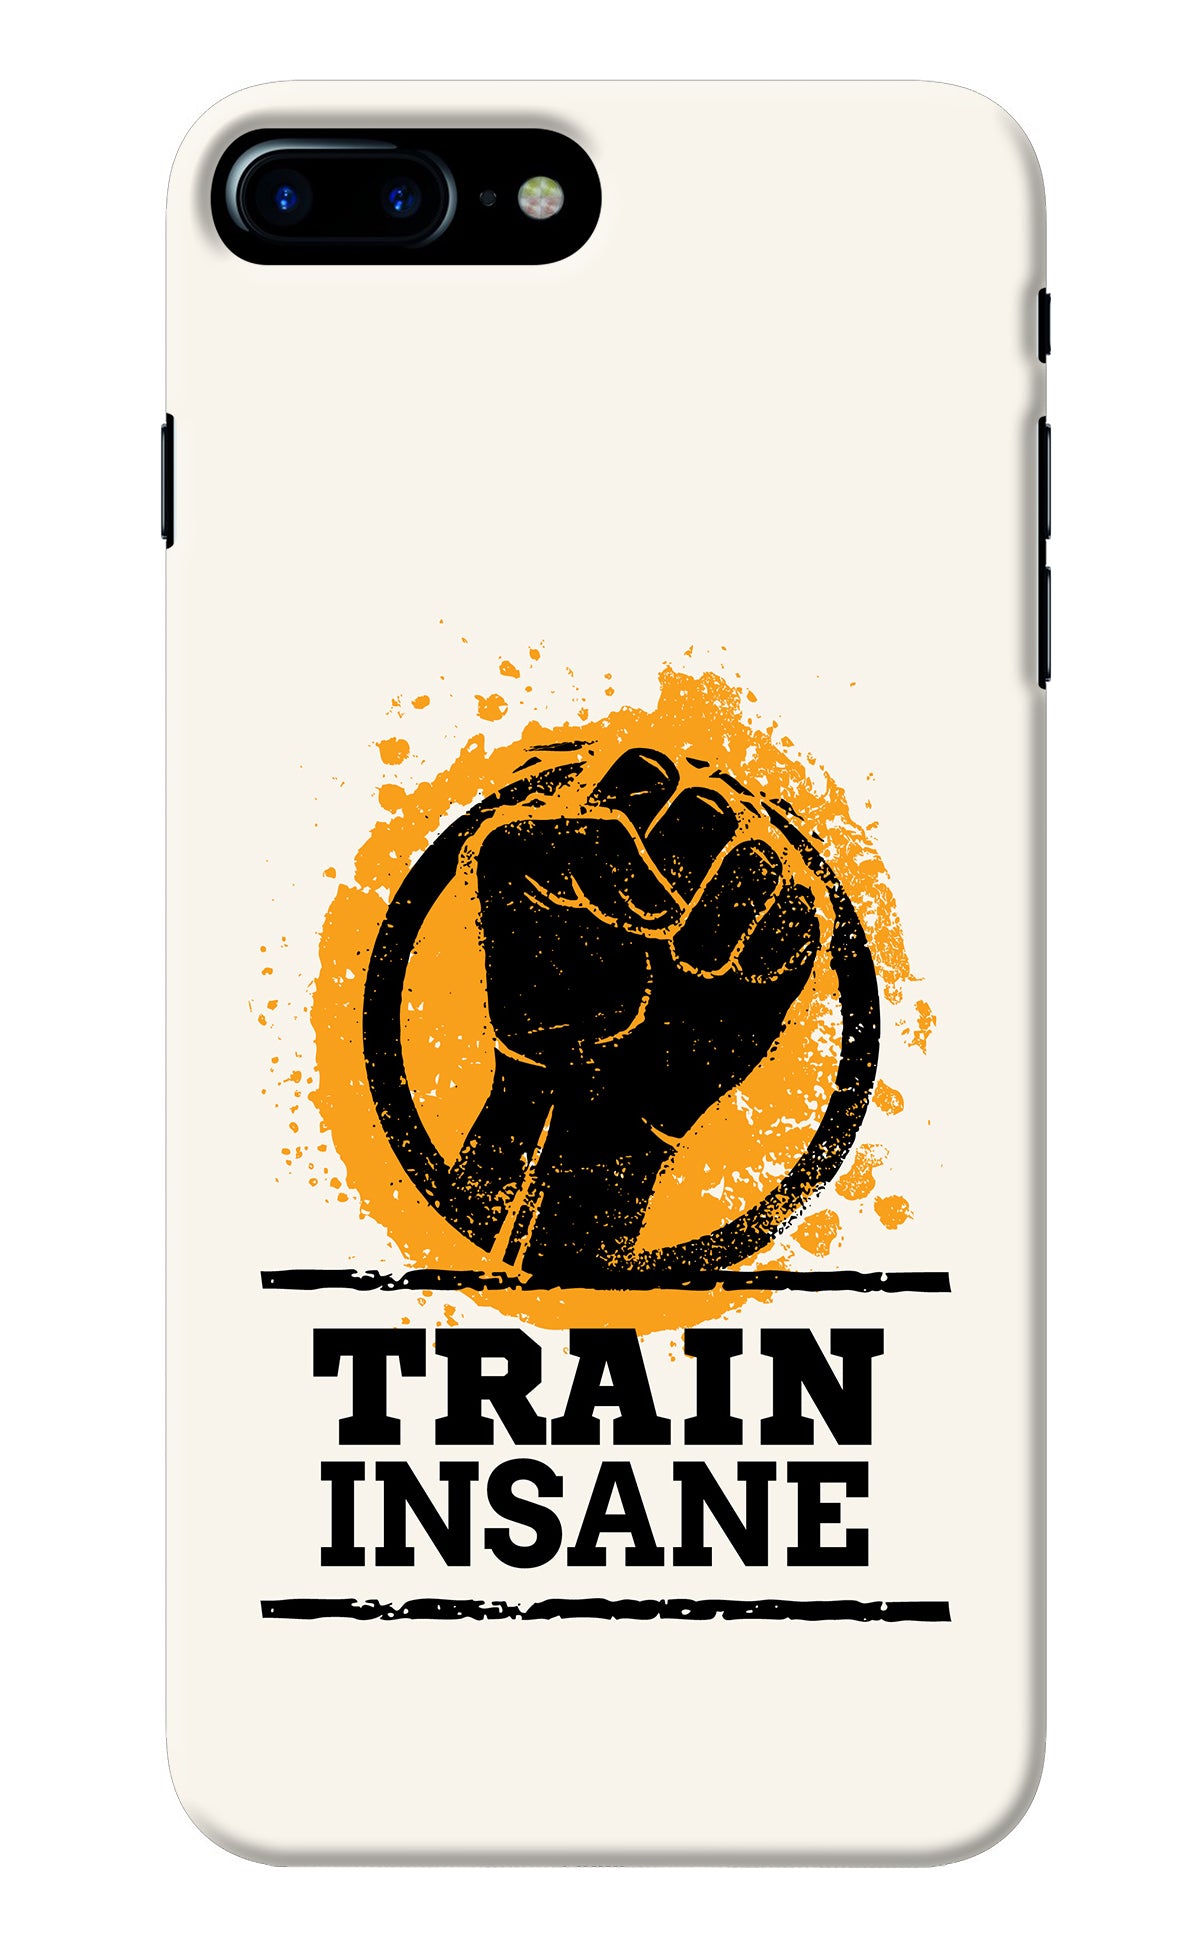 Train Insane iPhone 7 Plus Back Cover